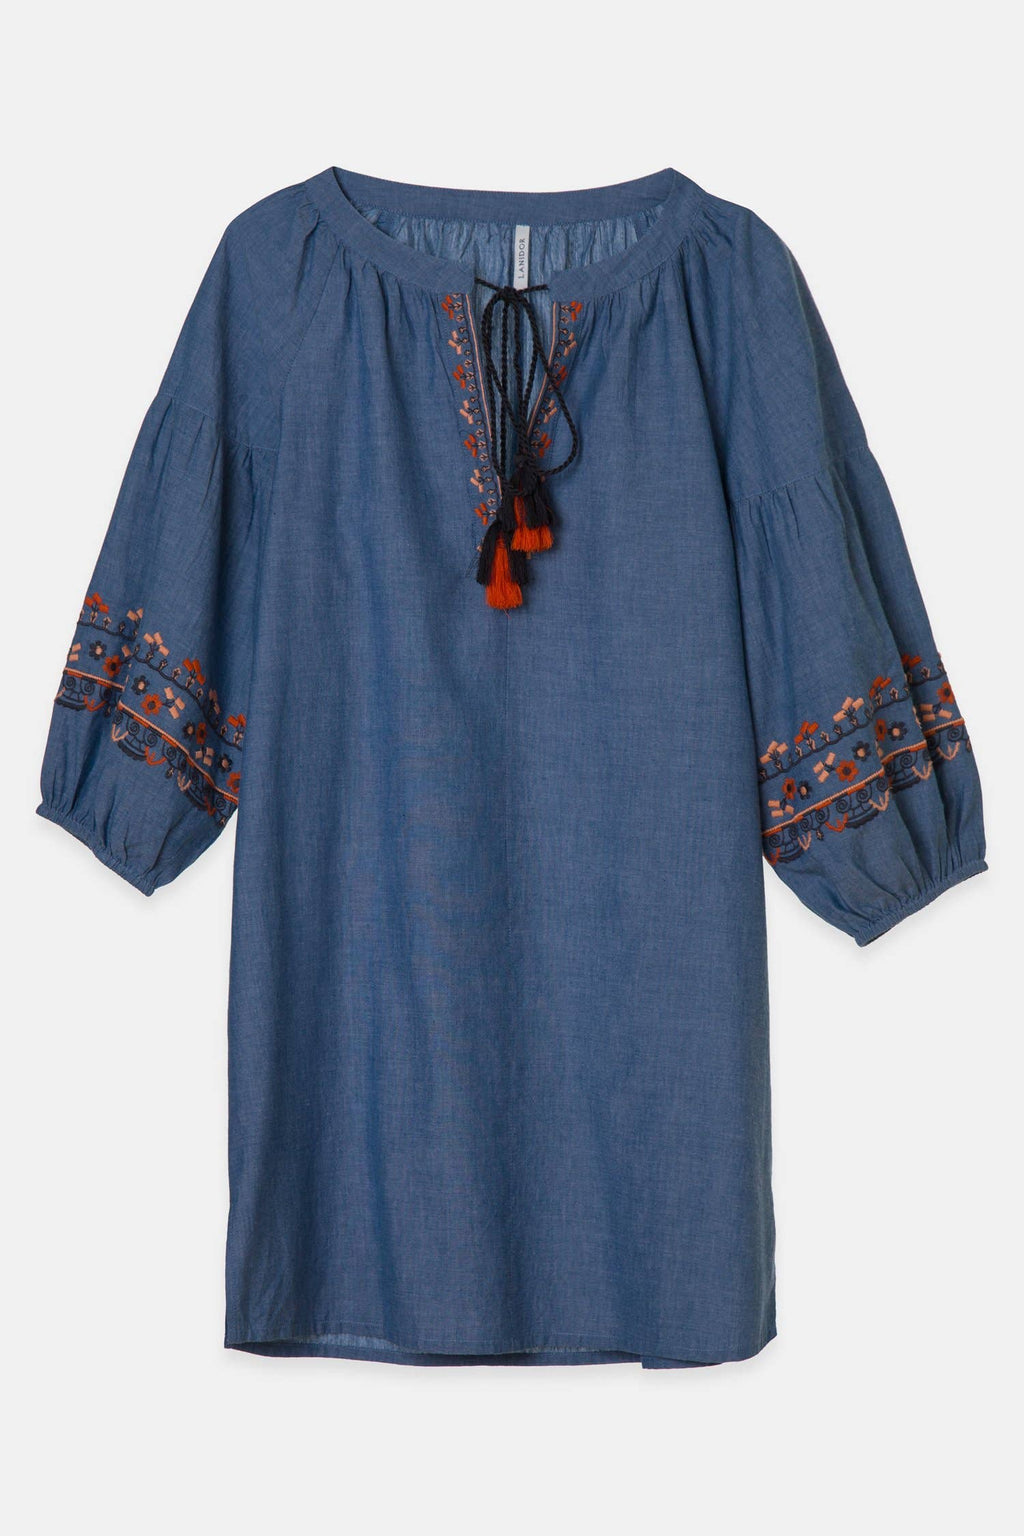 Lanidor - 100% cotton embroidered dress